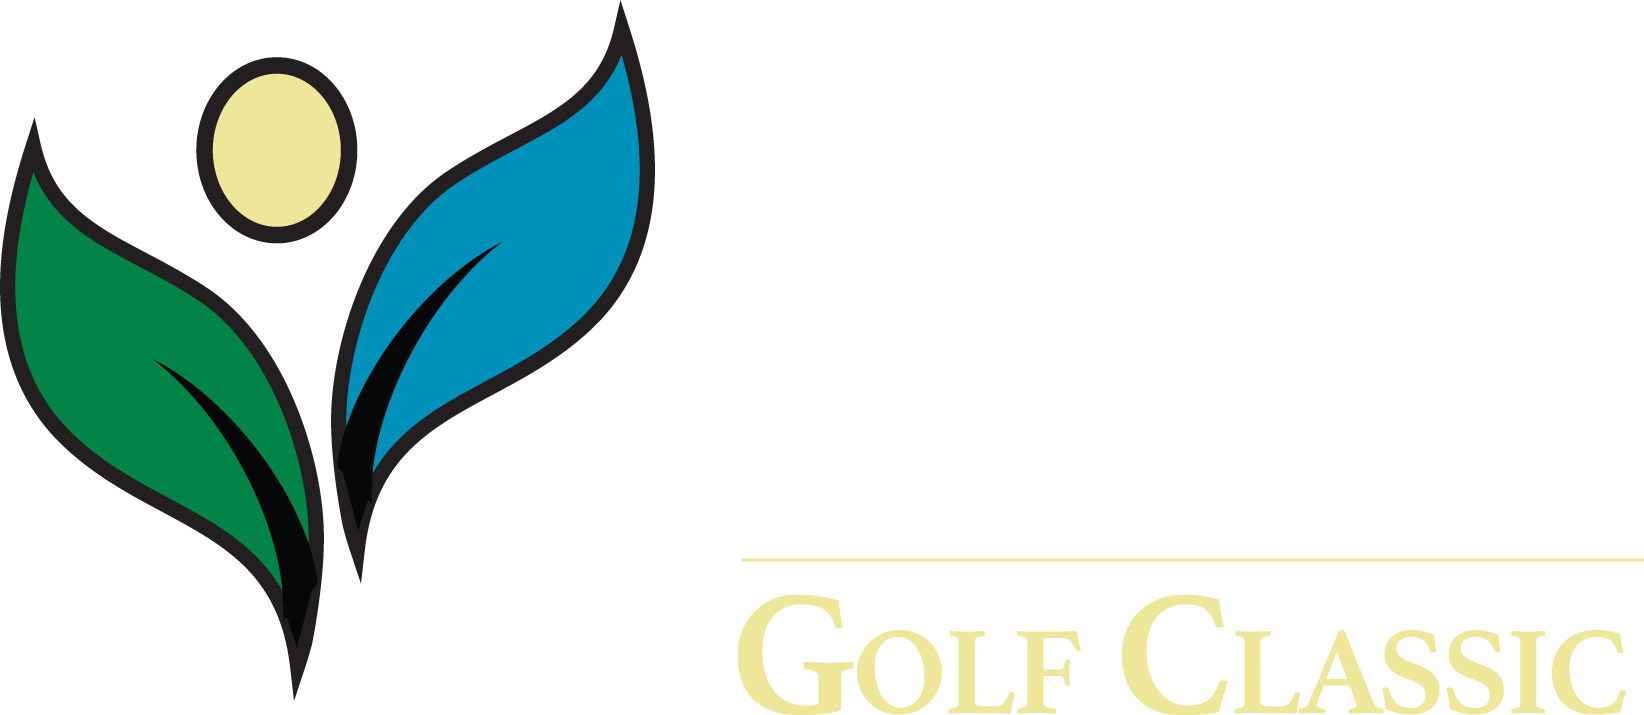 Community Wellness Partners Annual Golf Classic